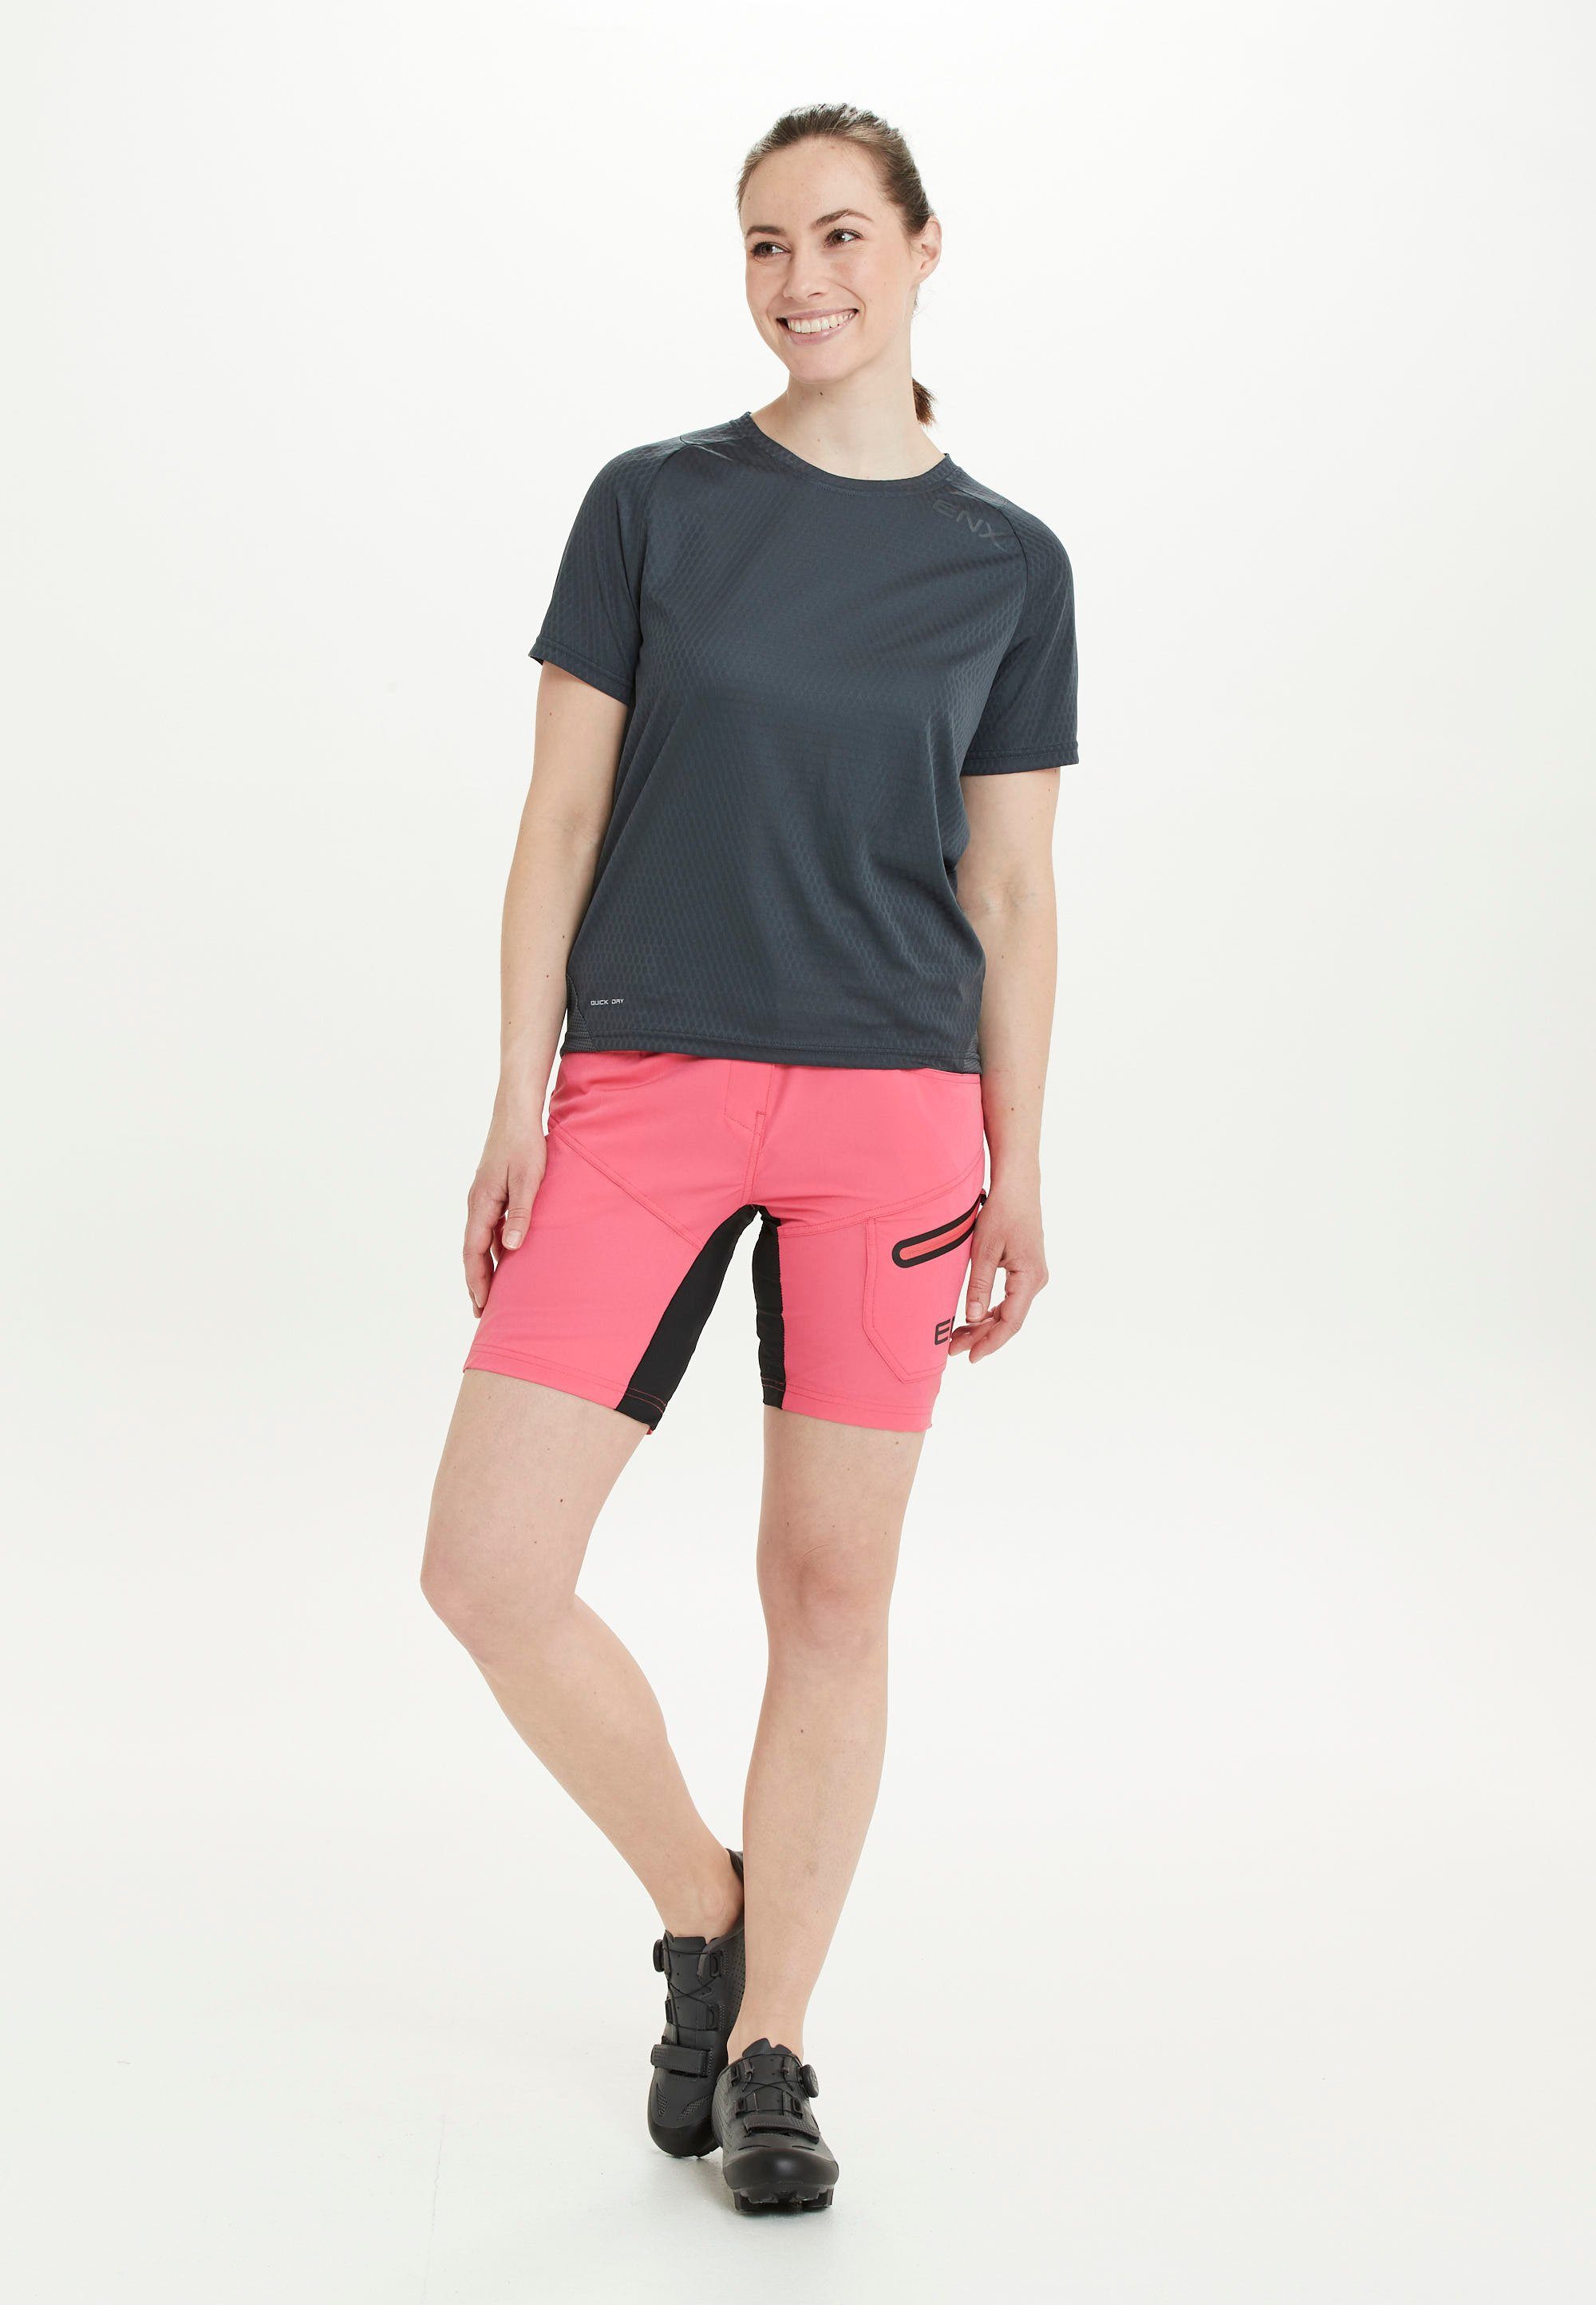 Shorts 1 2 W rosa Innen-Tights Radhose ENDURANCE herausnehmbarer Jamilla in mit